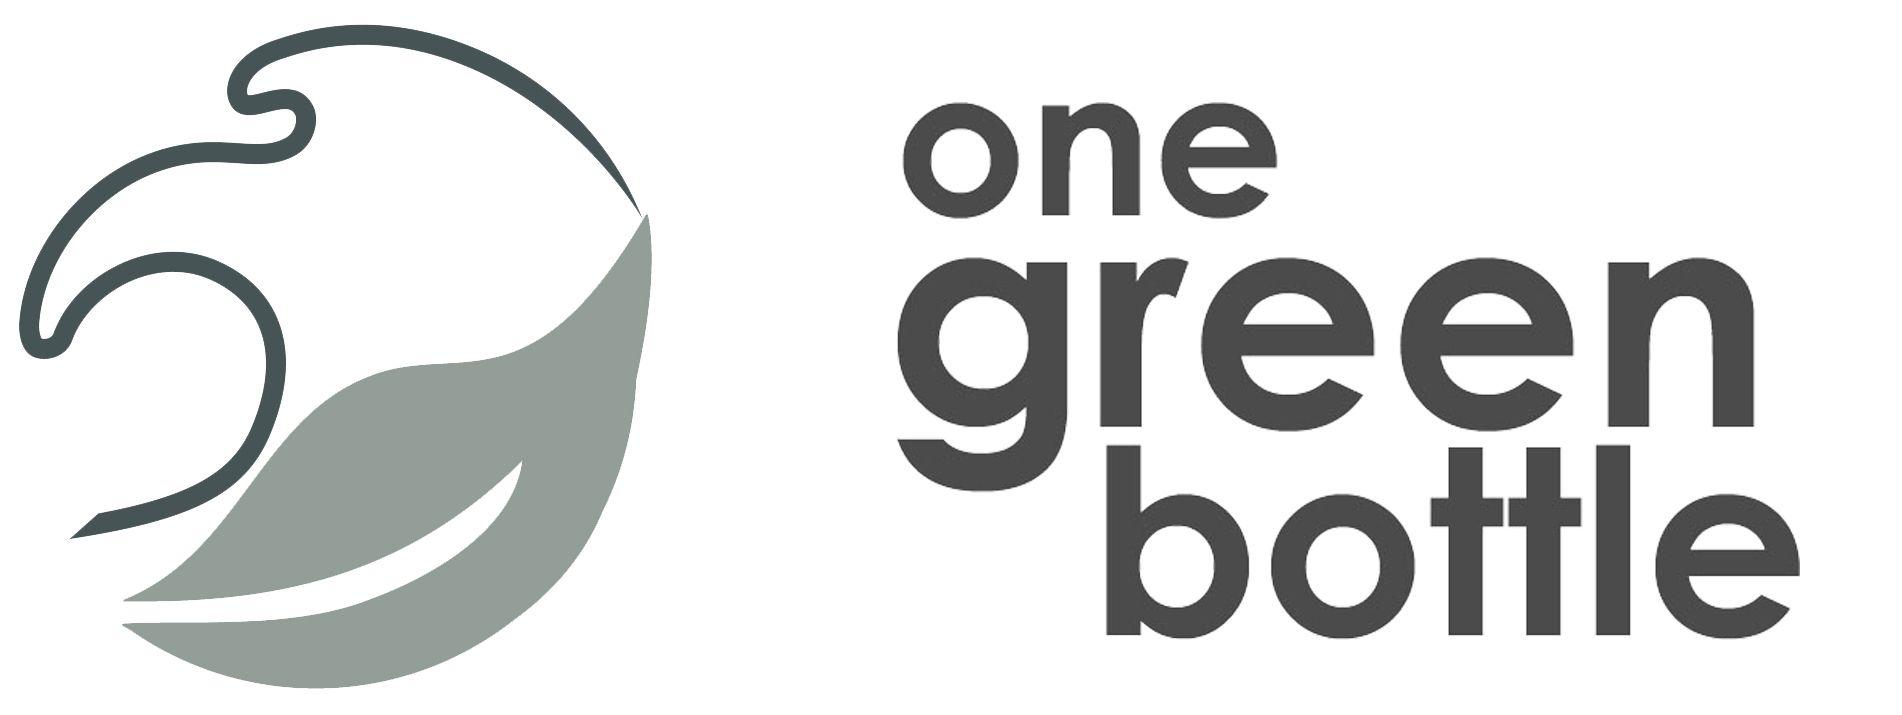 Bottle Green Logo - One Green Bottle